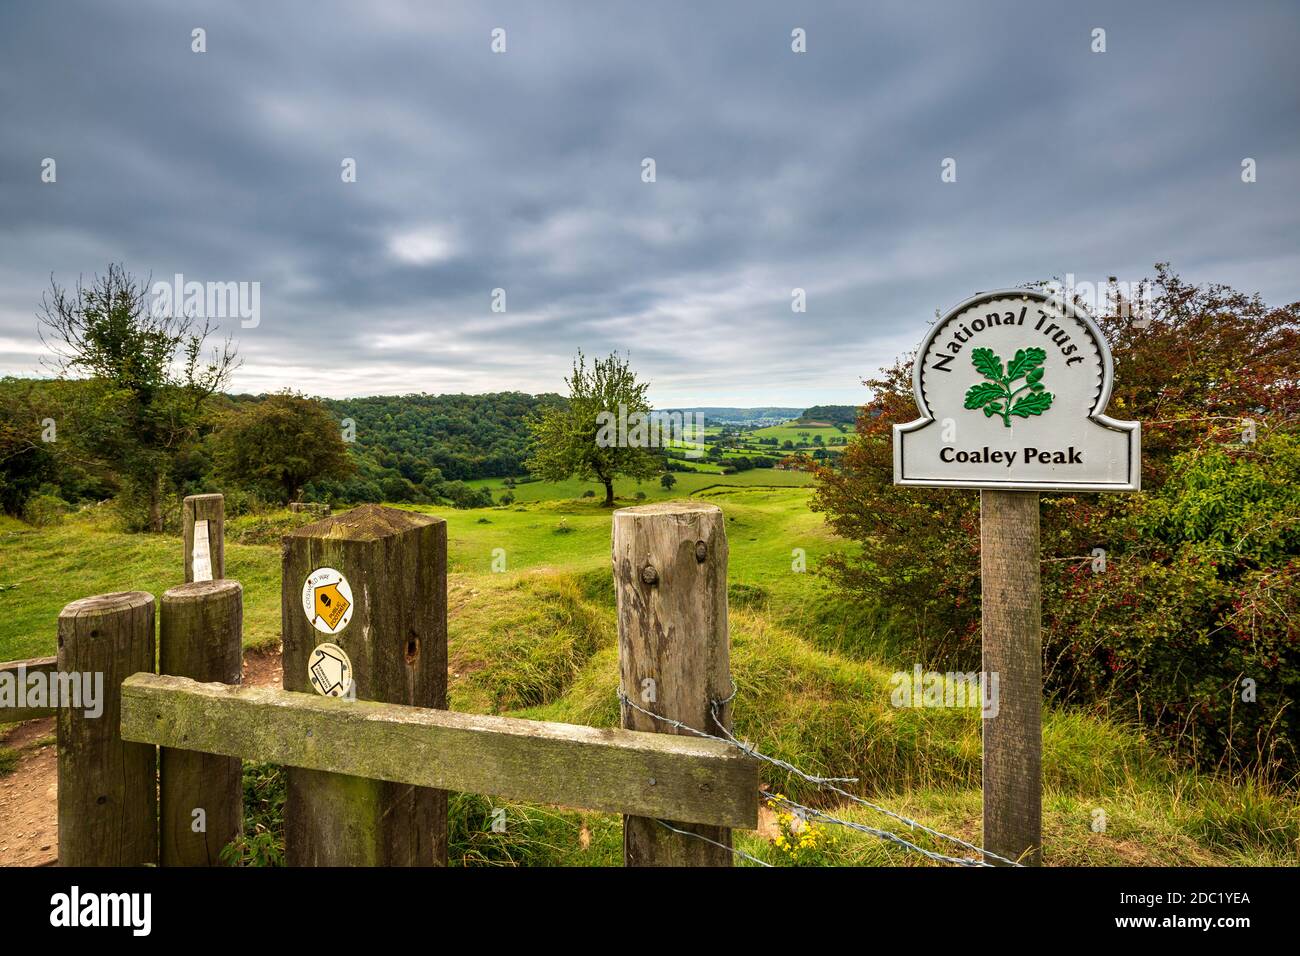 Der Eingang zum Coaley Peak entlang des Cotswold Way Fußweges, Gloucestershire, England Stockfoto